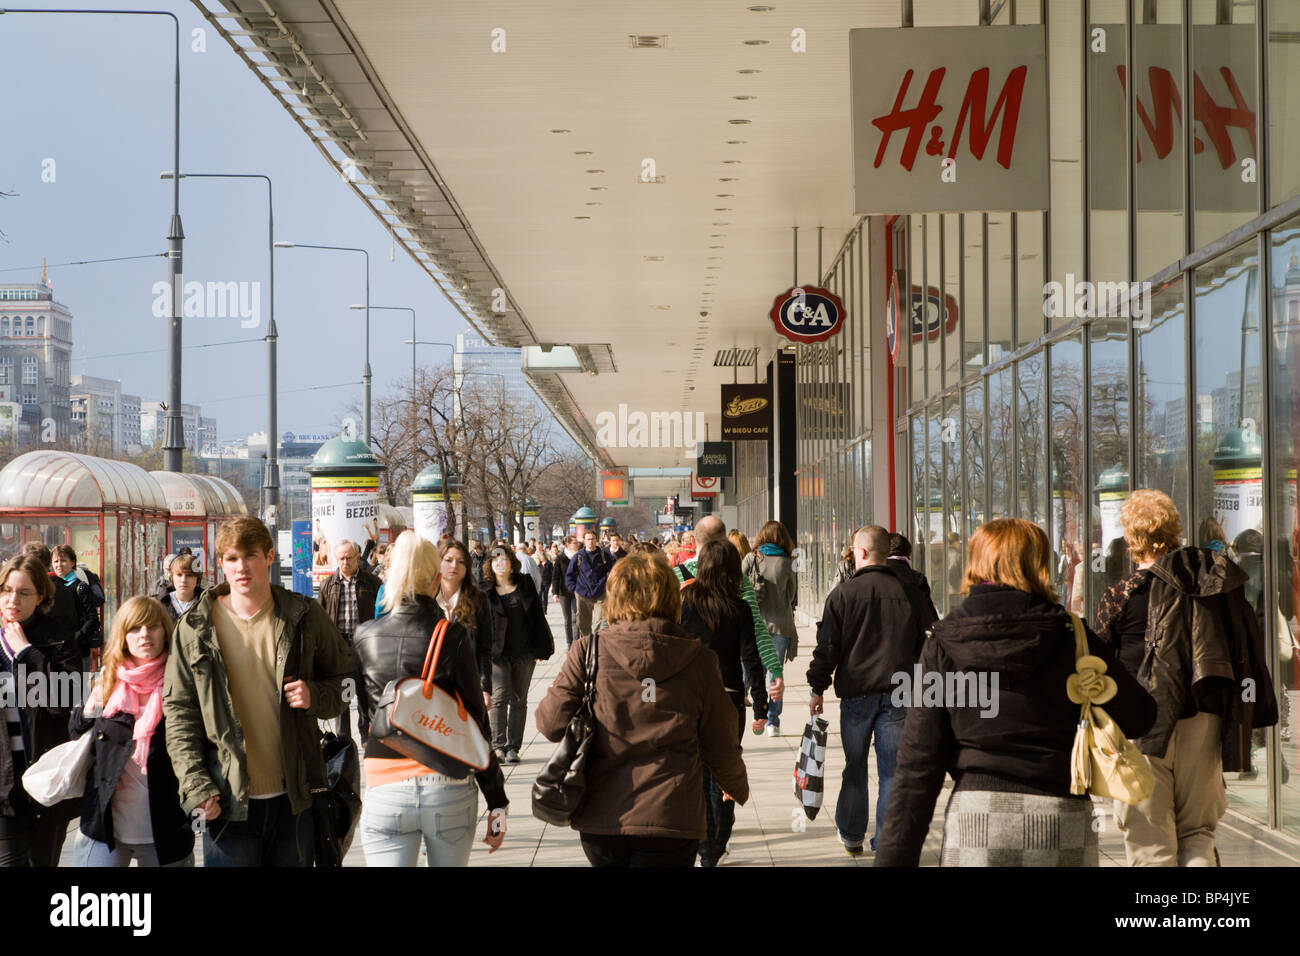 People walking on Marszalkowska street, Warsaw Poland. Stock Photo